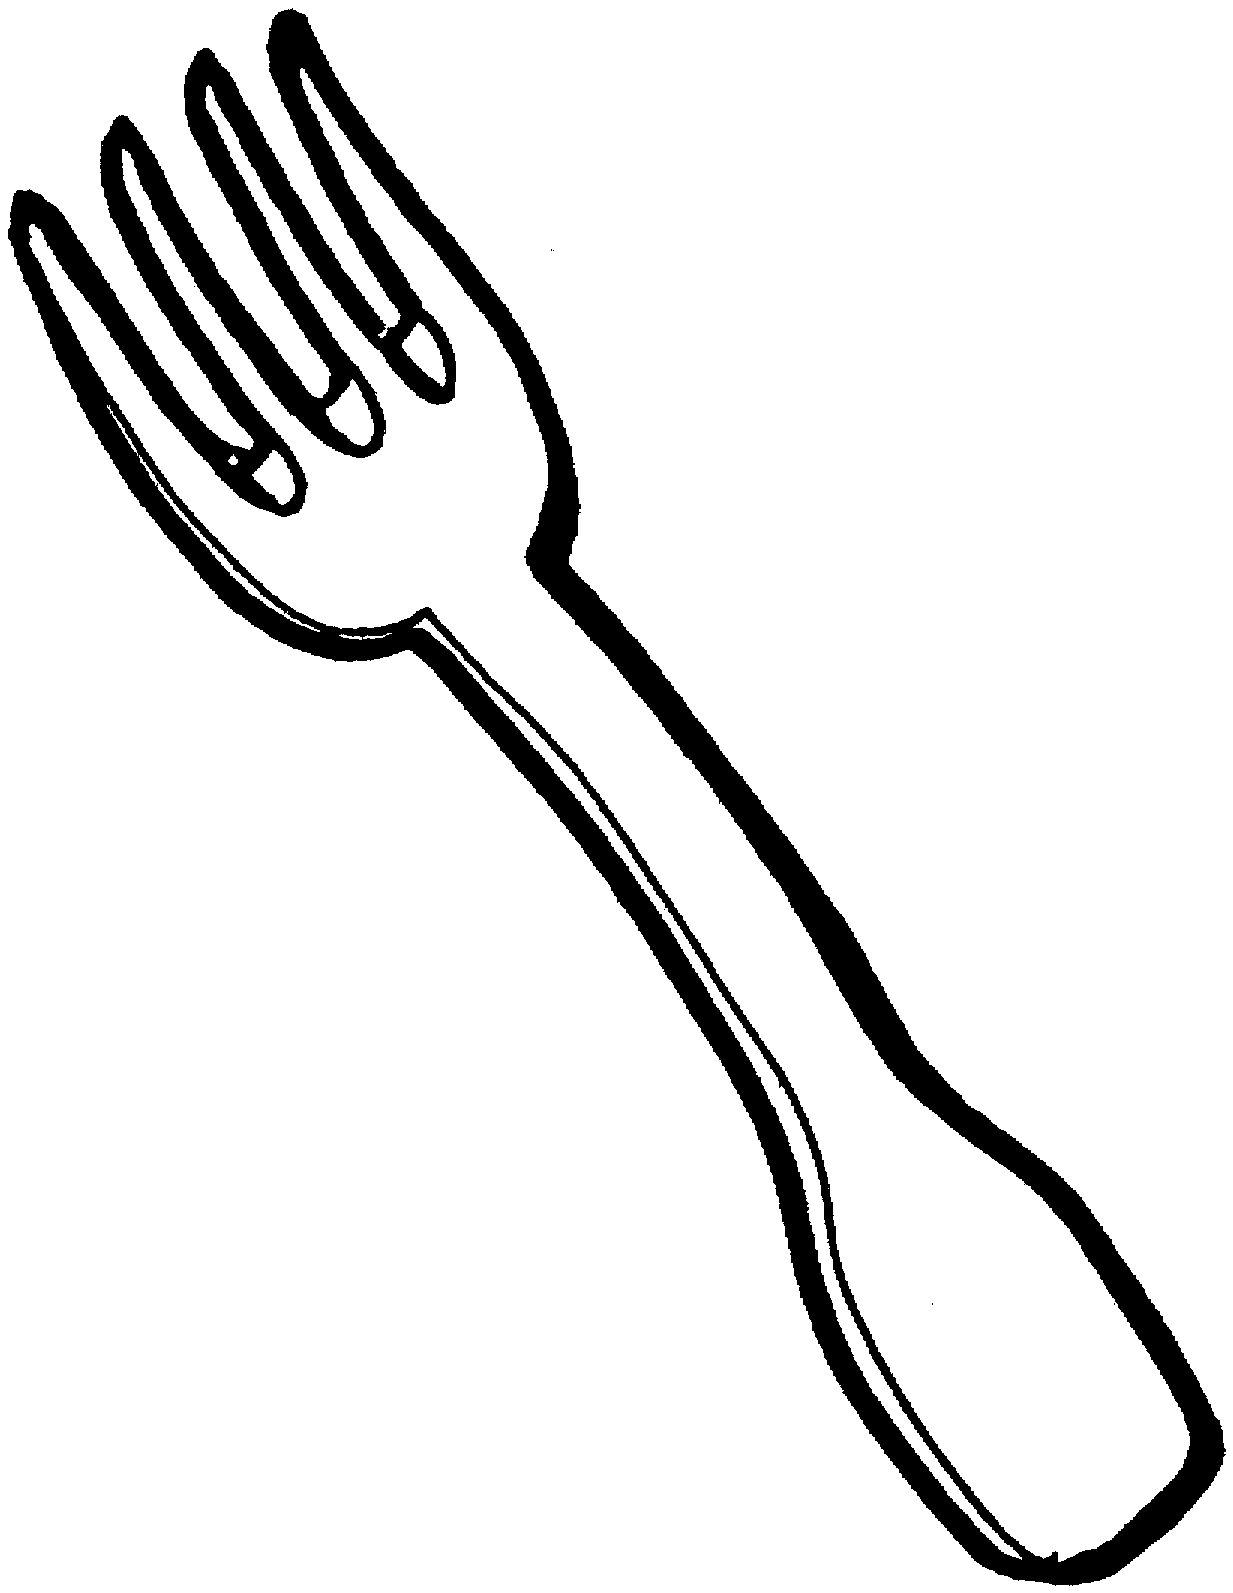 fork clipart black and white